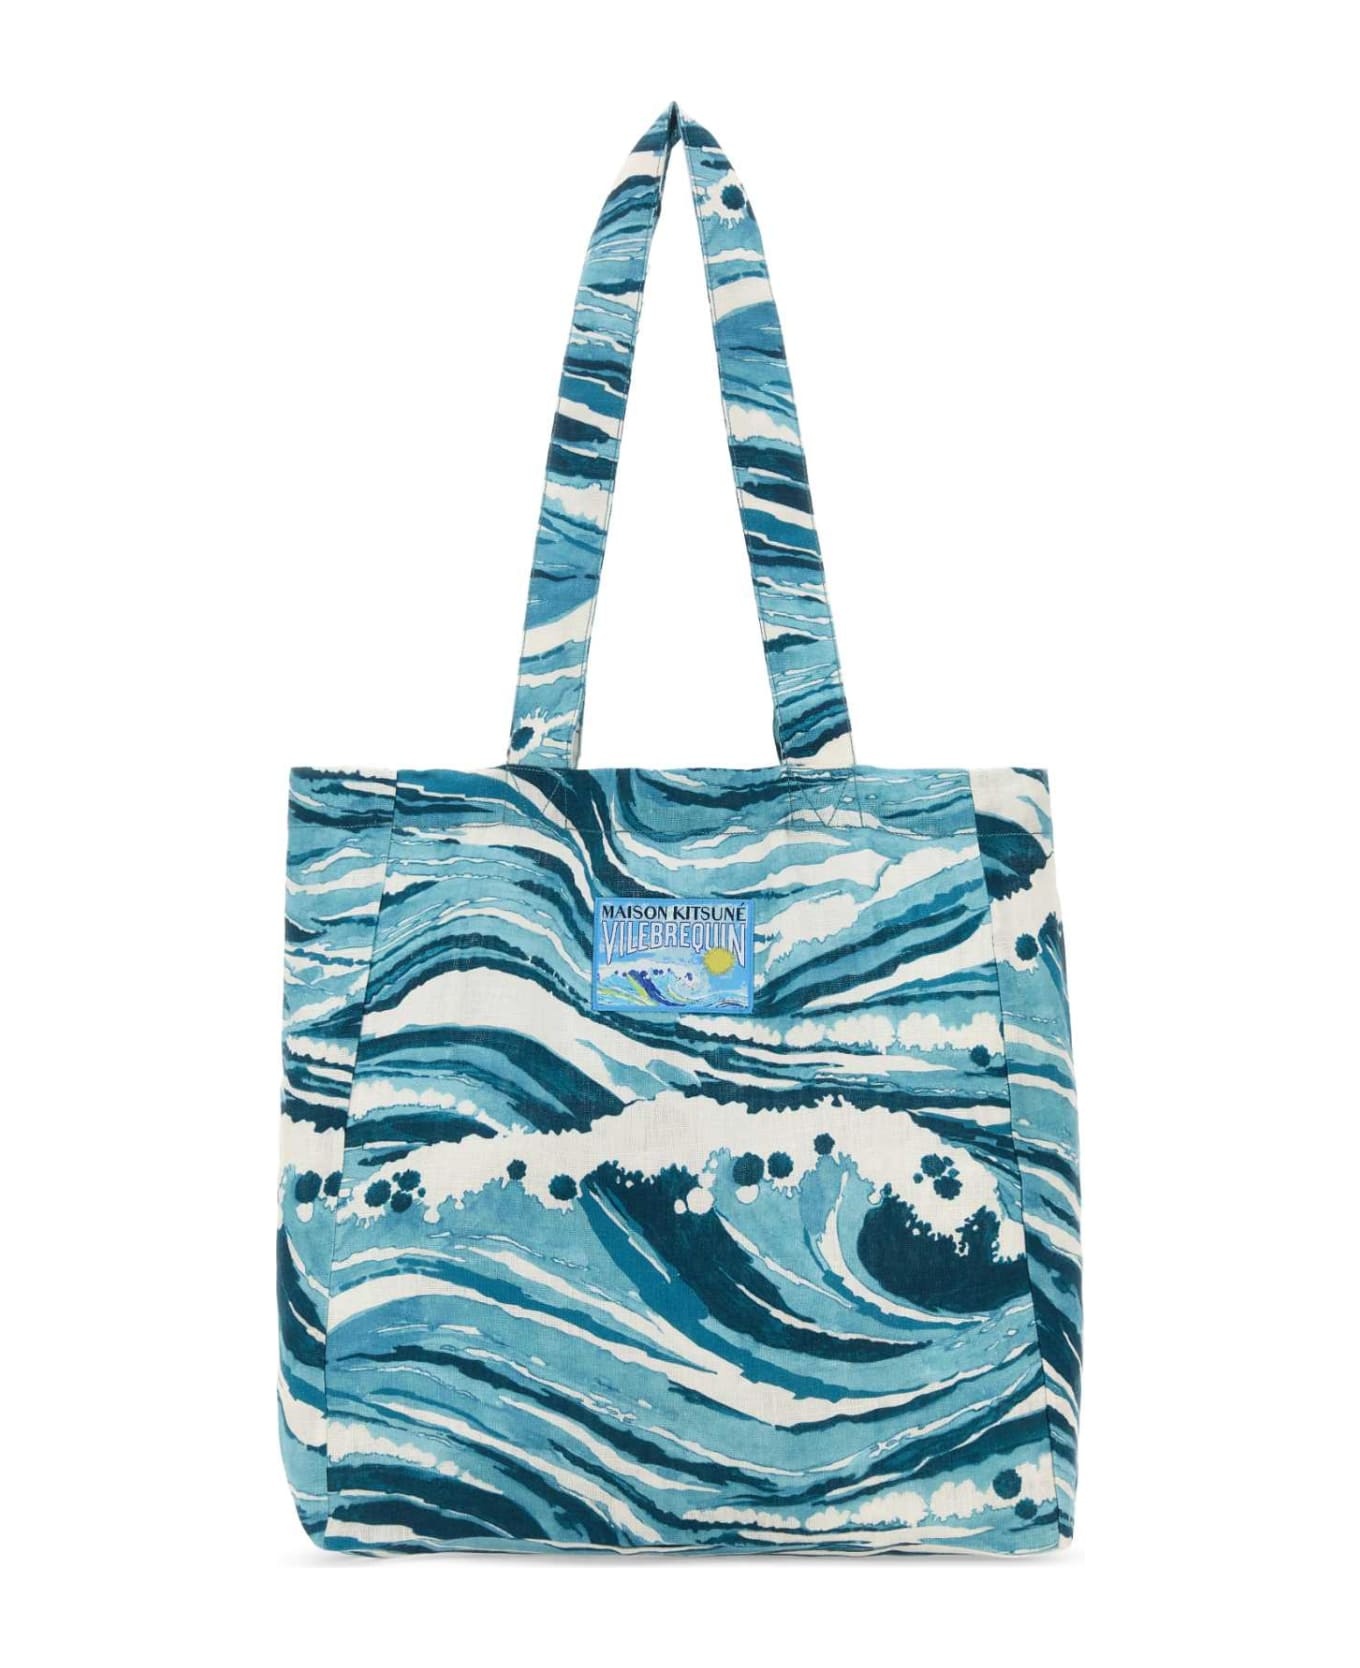 Printed Fabric Villebrequin X Maison Kitsune Shopping Bag - 1